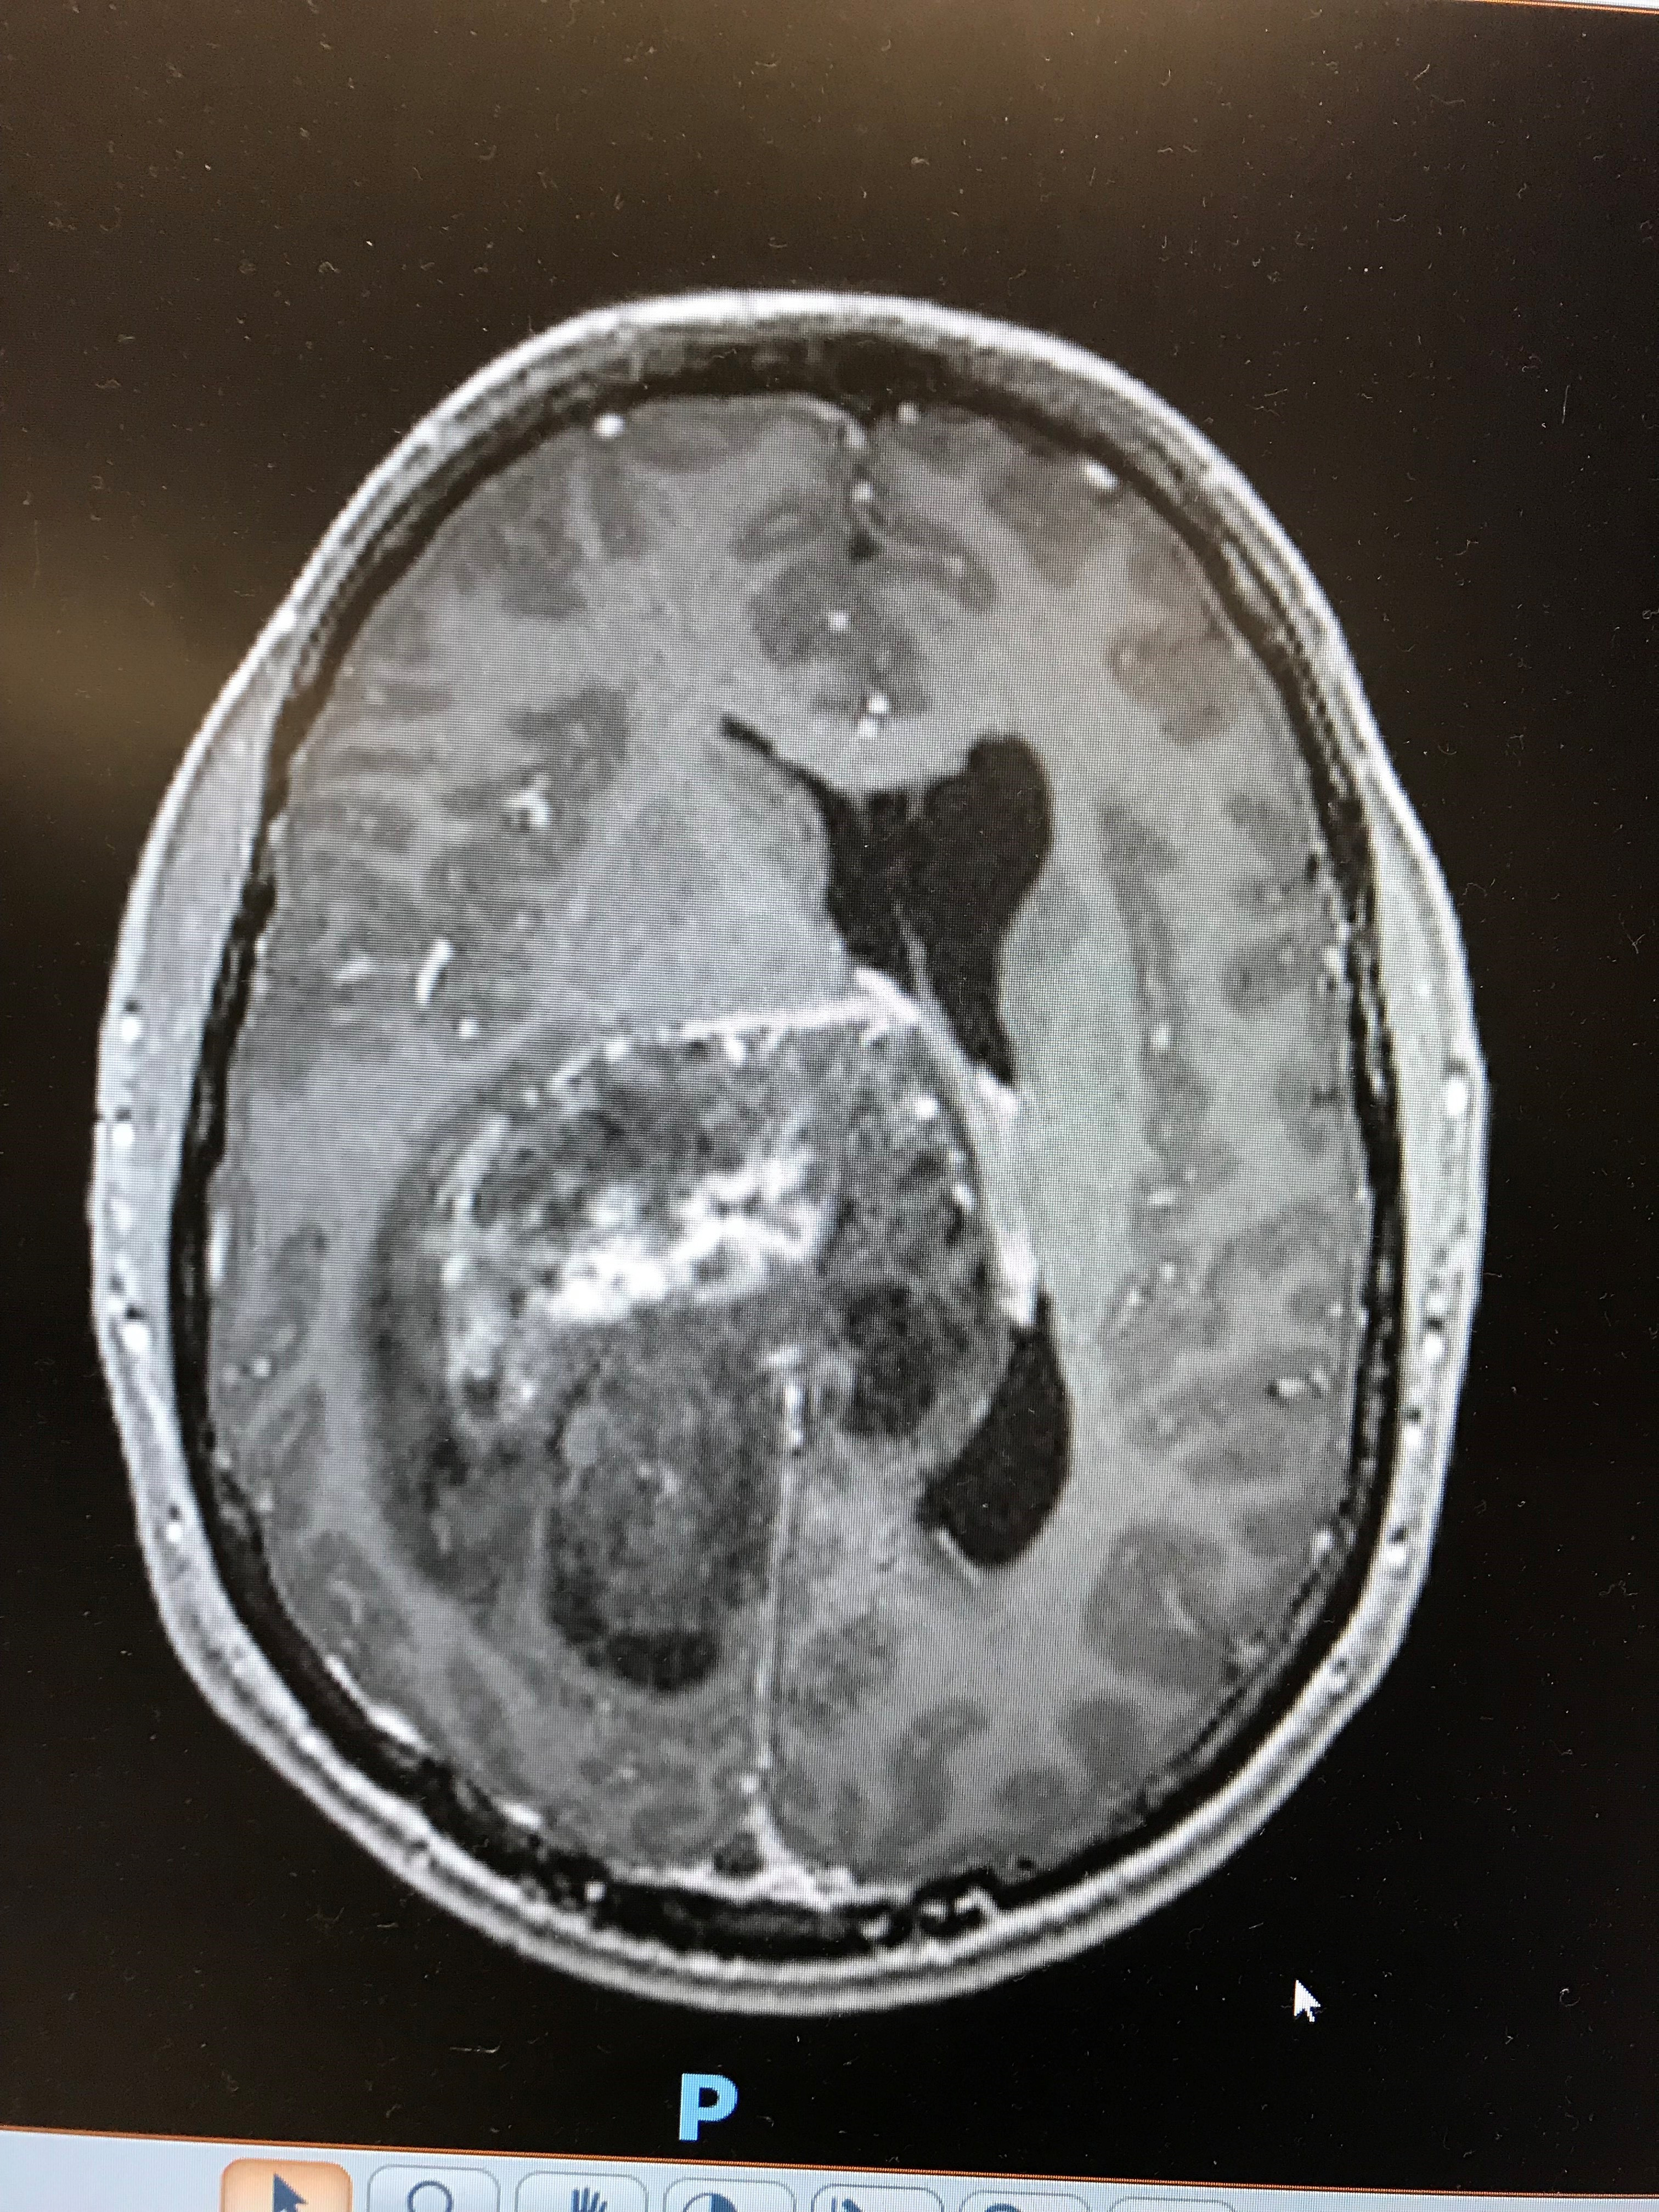 Matt MRI scan.jpg (3.40 MB)